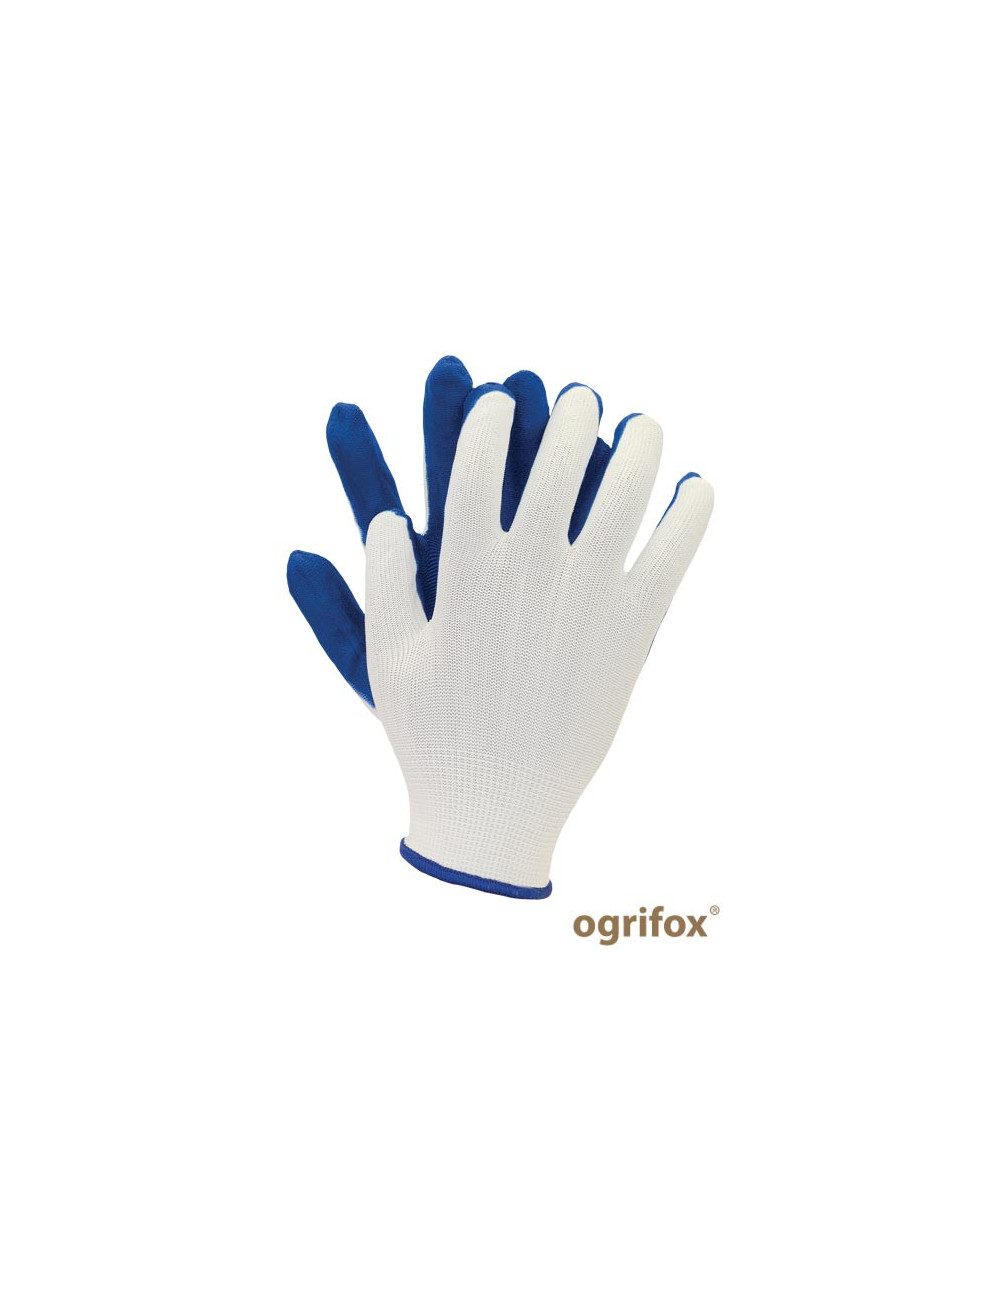 Working gloves ox.11.386 latua ox-latua wn white-blue Ogrifox